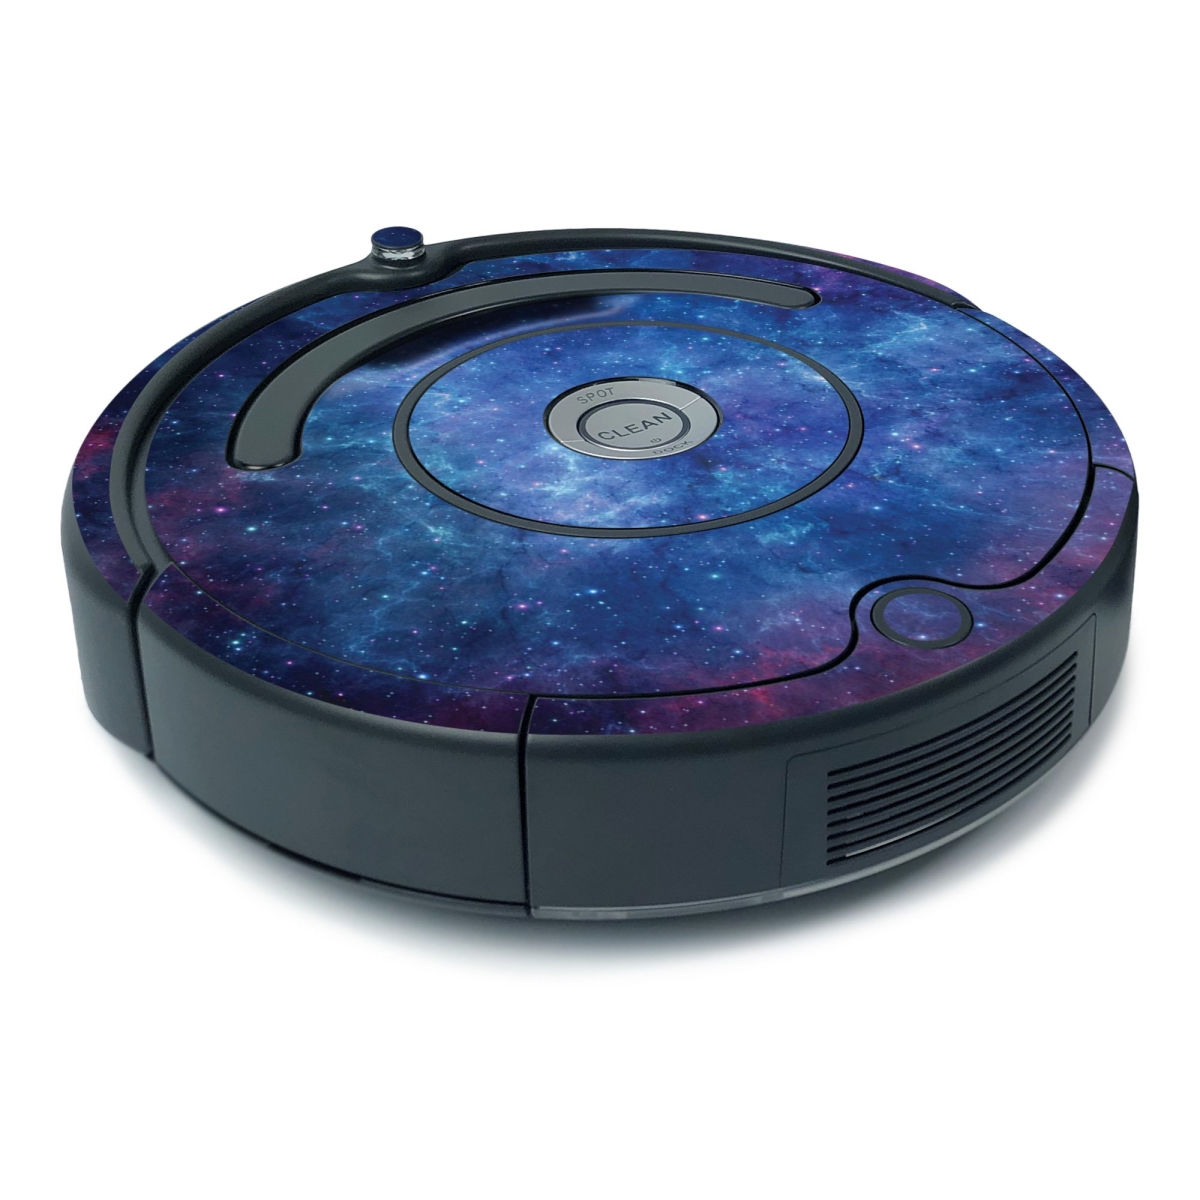 Picture of MightySkins IRRO675MIN-Nebula Skin Decal Wrap for iRobot Roomba 675 Minimal Coverage Sticker - Nebula